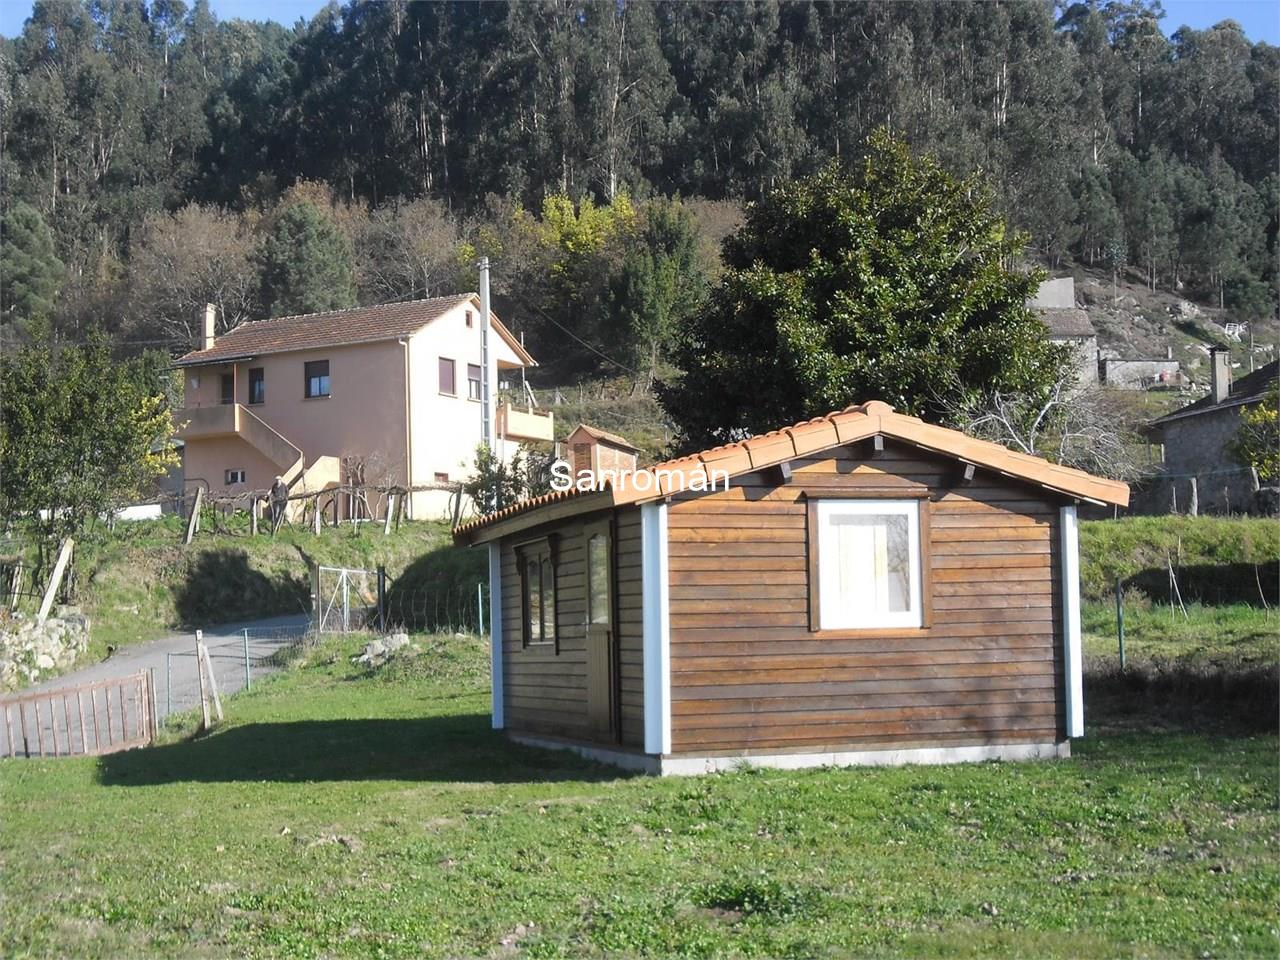 Foto 2 Terreno edificable con casa prefabricada de madera en Tebra (Tomiño)